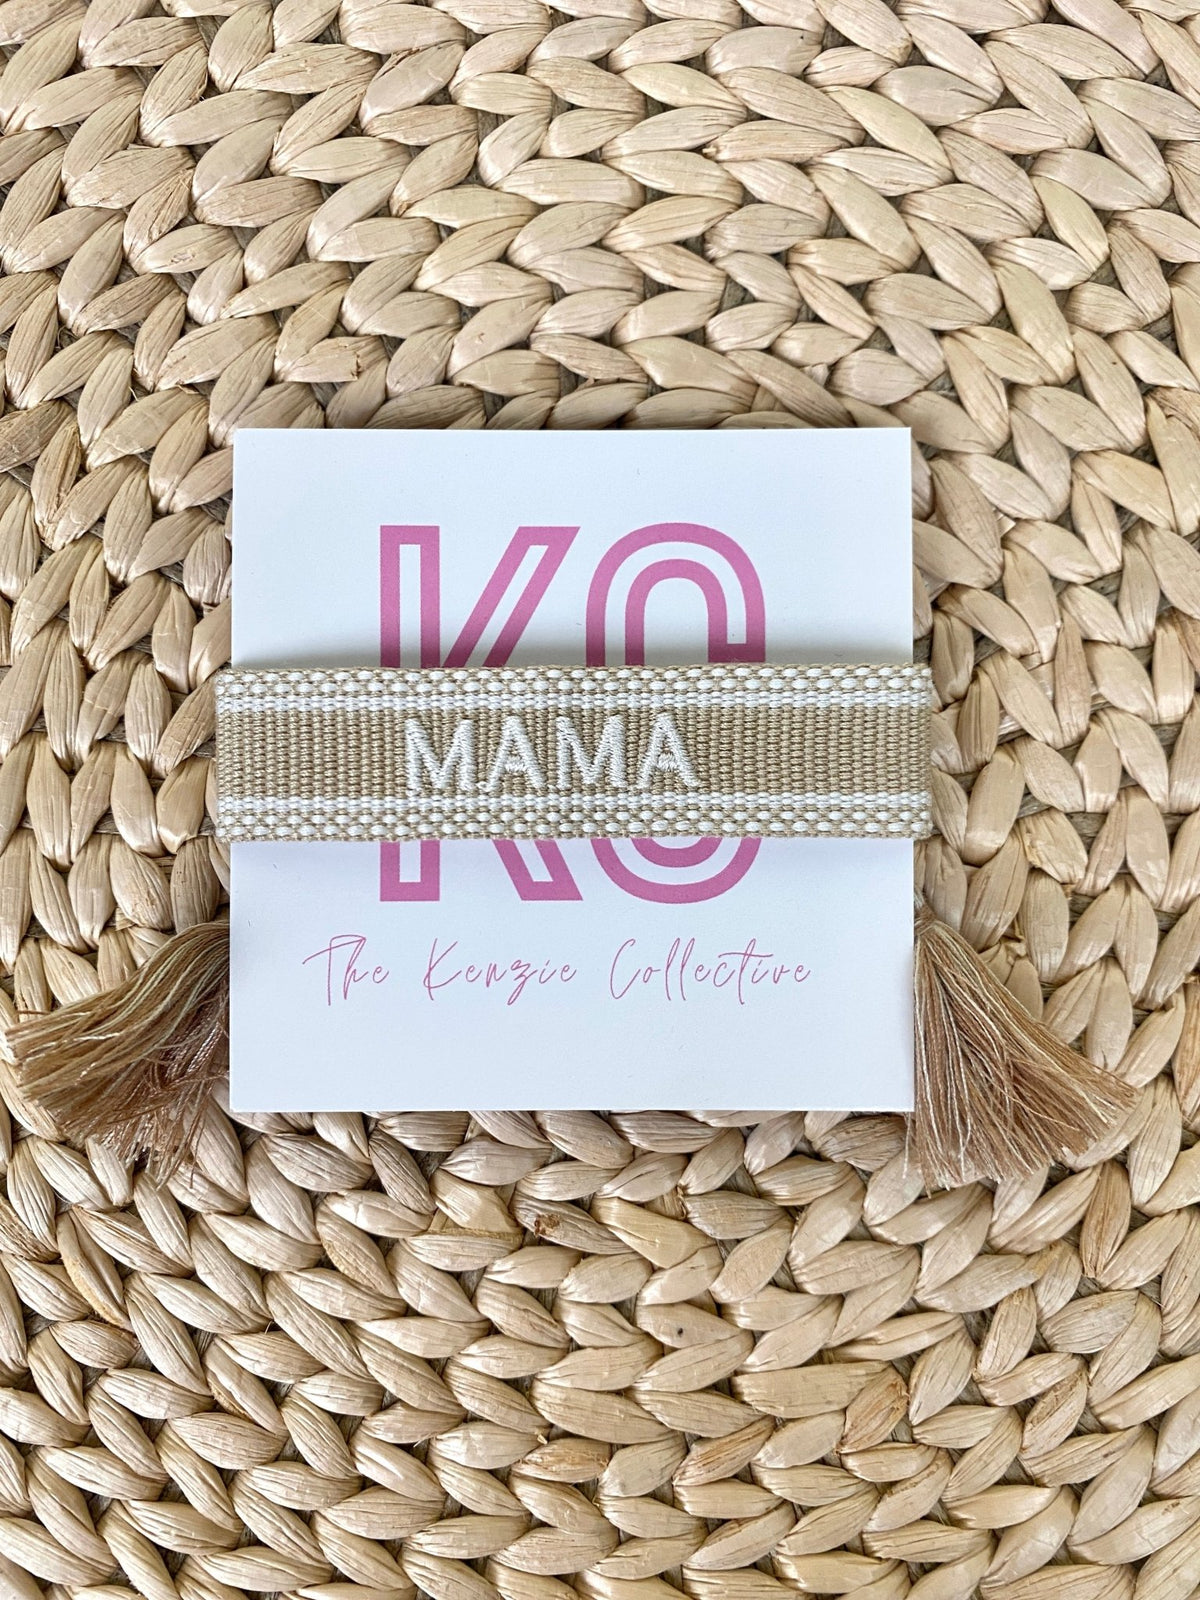 Mama tassel bracelet tan - Stylish Bracelets - Trendy Gifts for Mom at Lush Fashion Lounge in Oklahoma